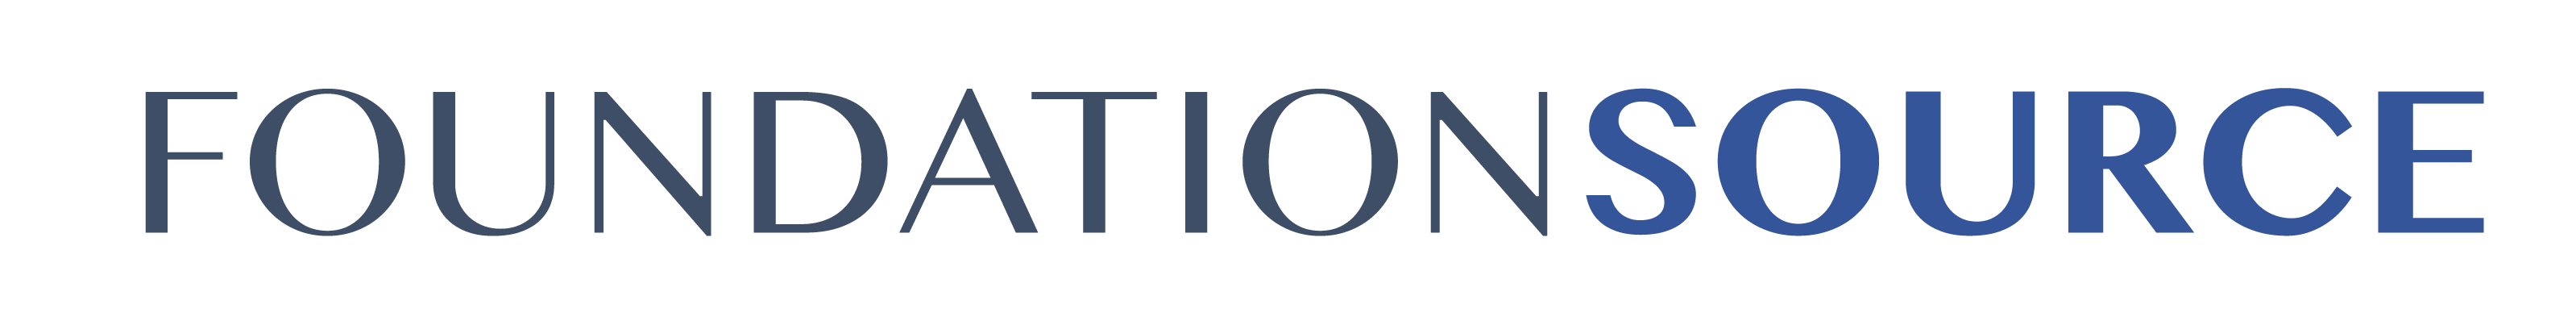 Foundation Source Logo Sliced